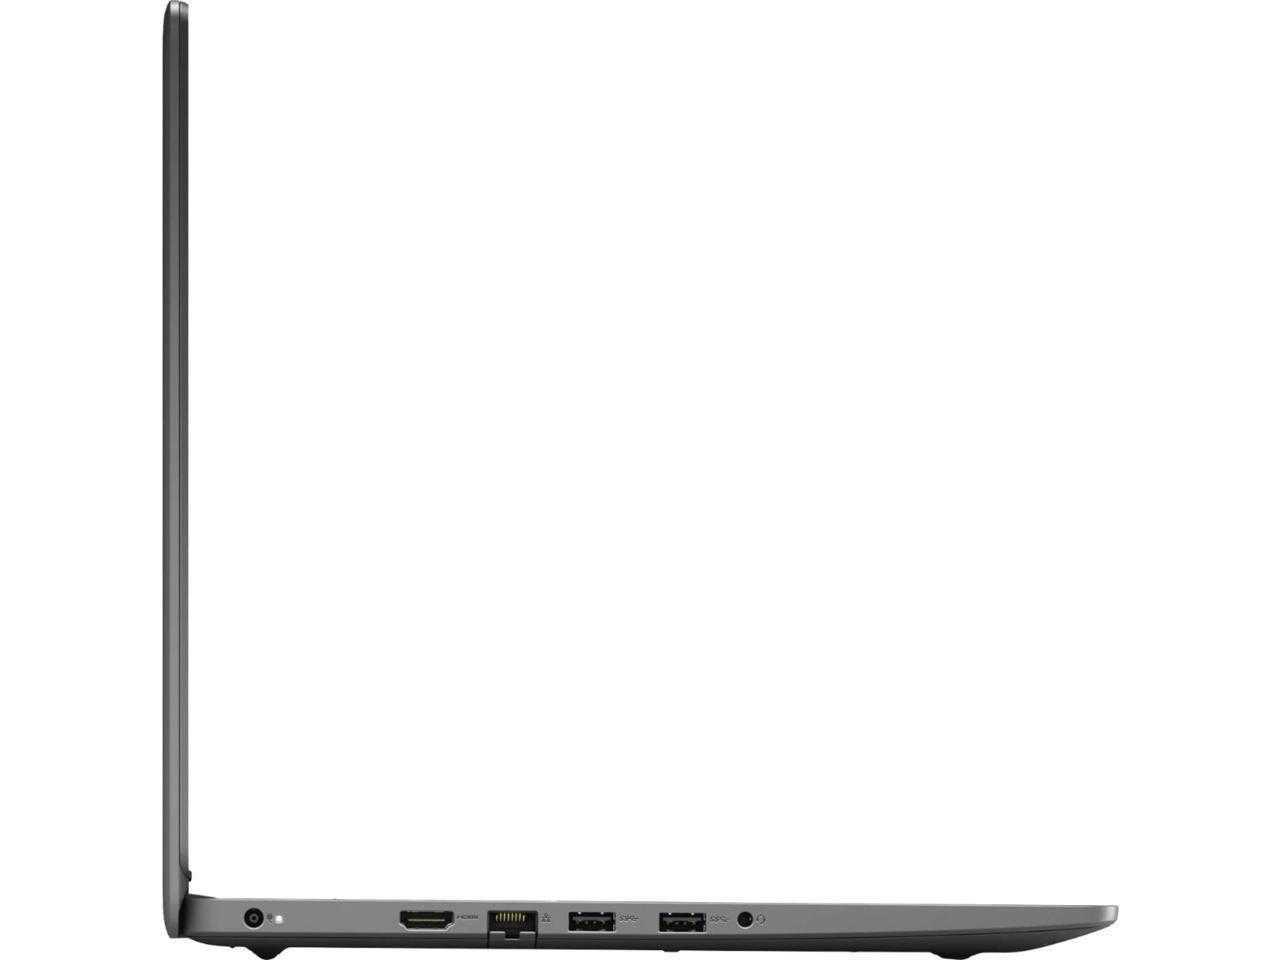 DELL, Dell Inspiron 15.6" Full Hd Touchscreen Laptop,Amd Ryzen 5 3450U Processor,16Gb Ddr4,512Gb Ssd